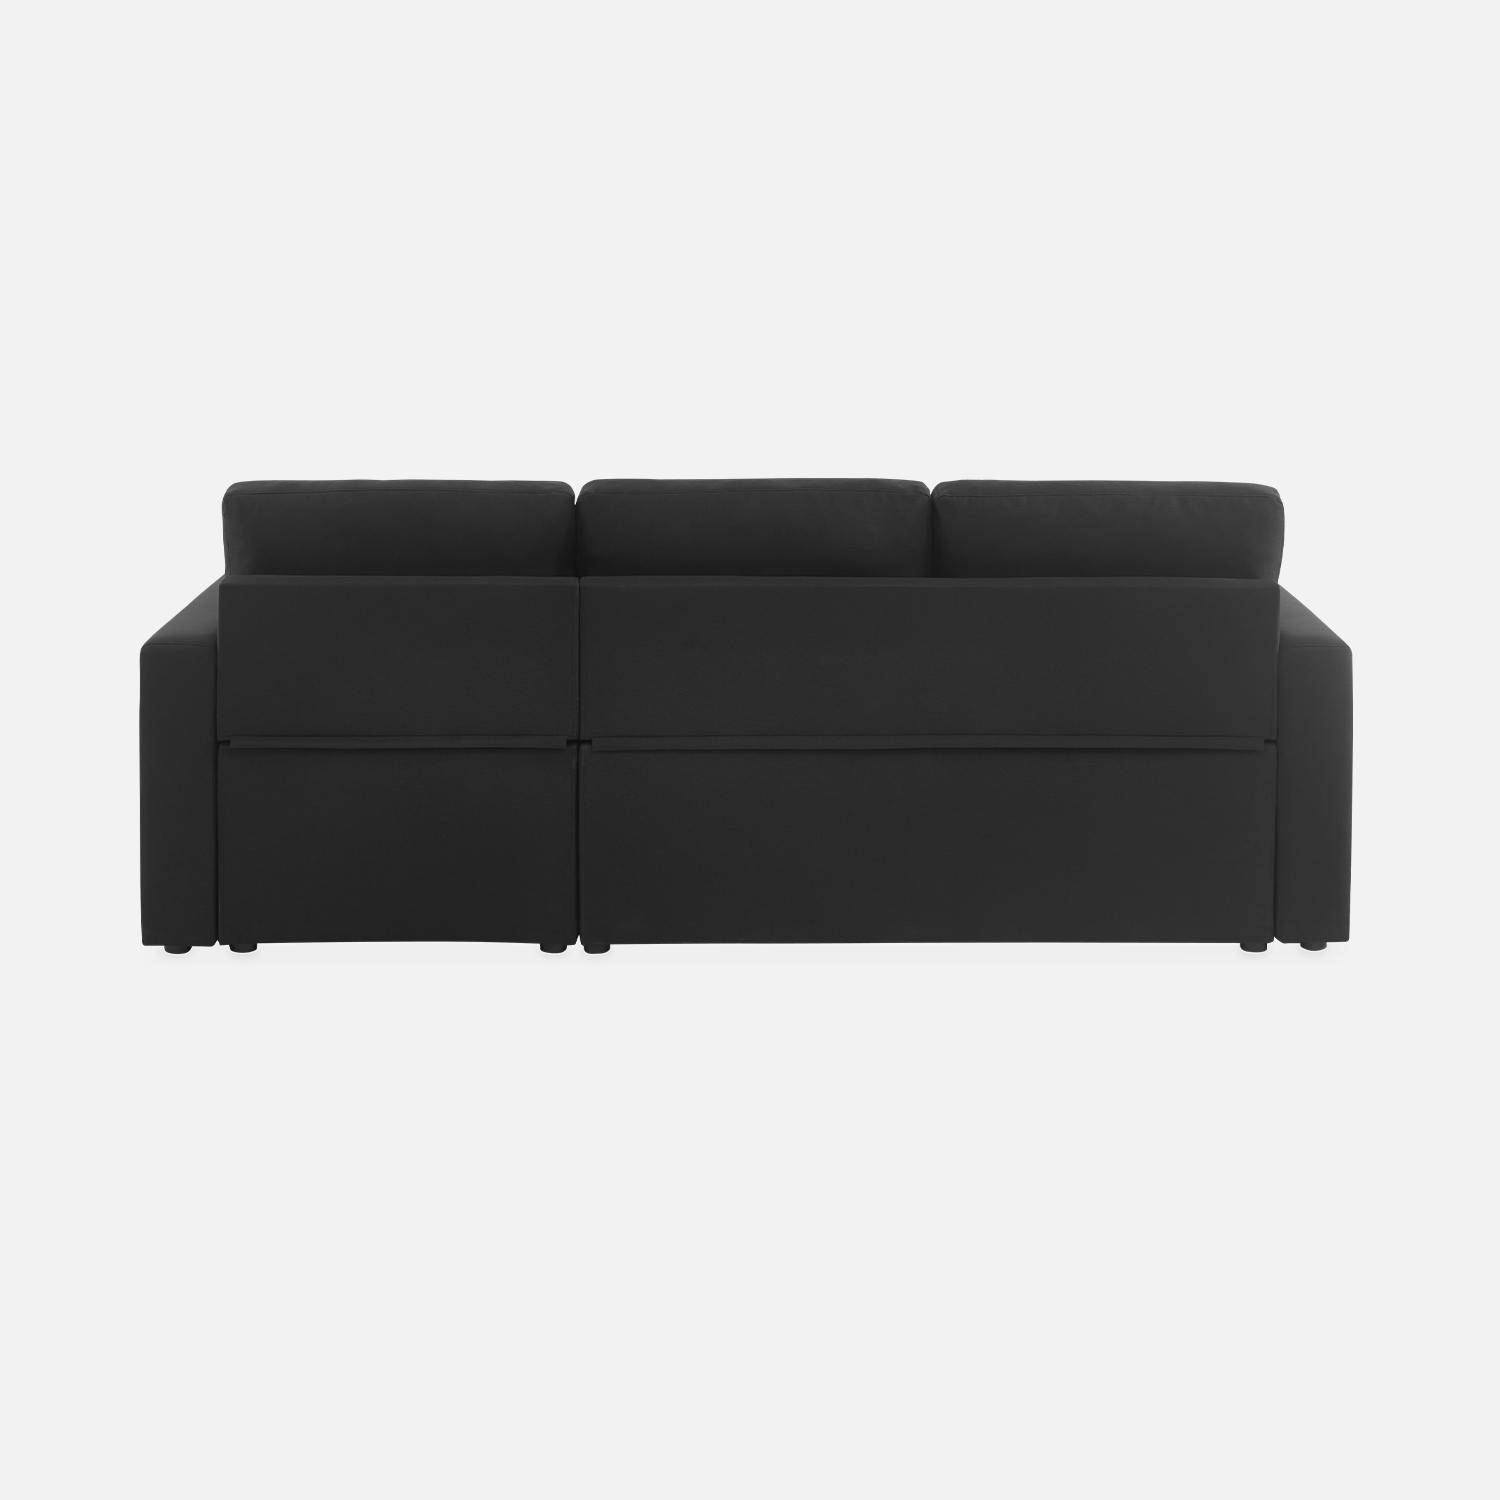 3-seater reversible black corner sofa bed with storage box, black L219xD81xH68cm, IDA,sweeek,Photo7